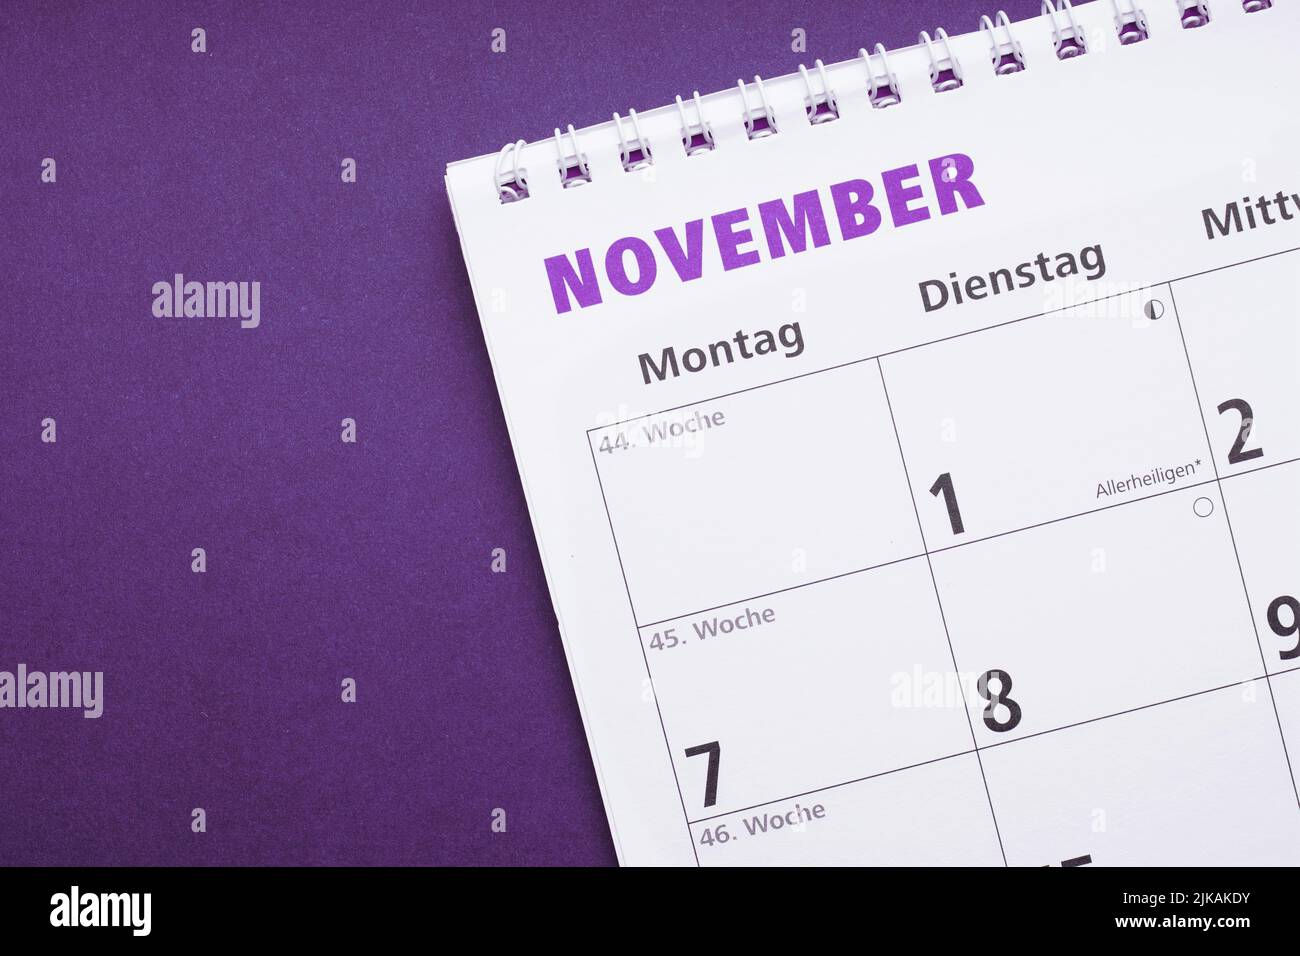 german calendar or monthly planner for november Stock Photo